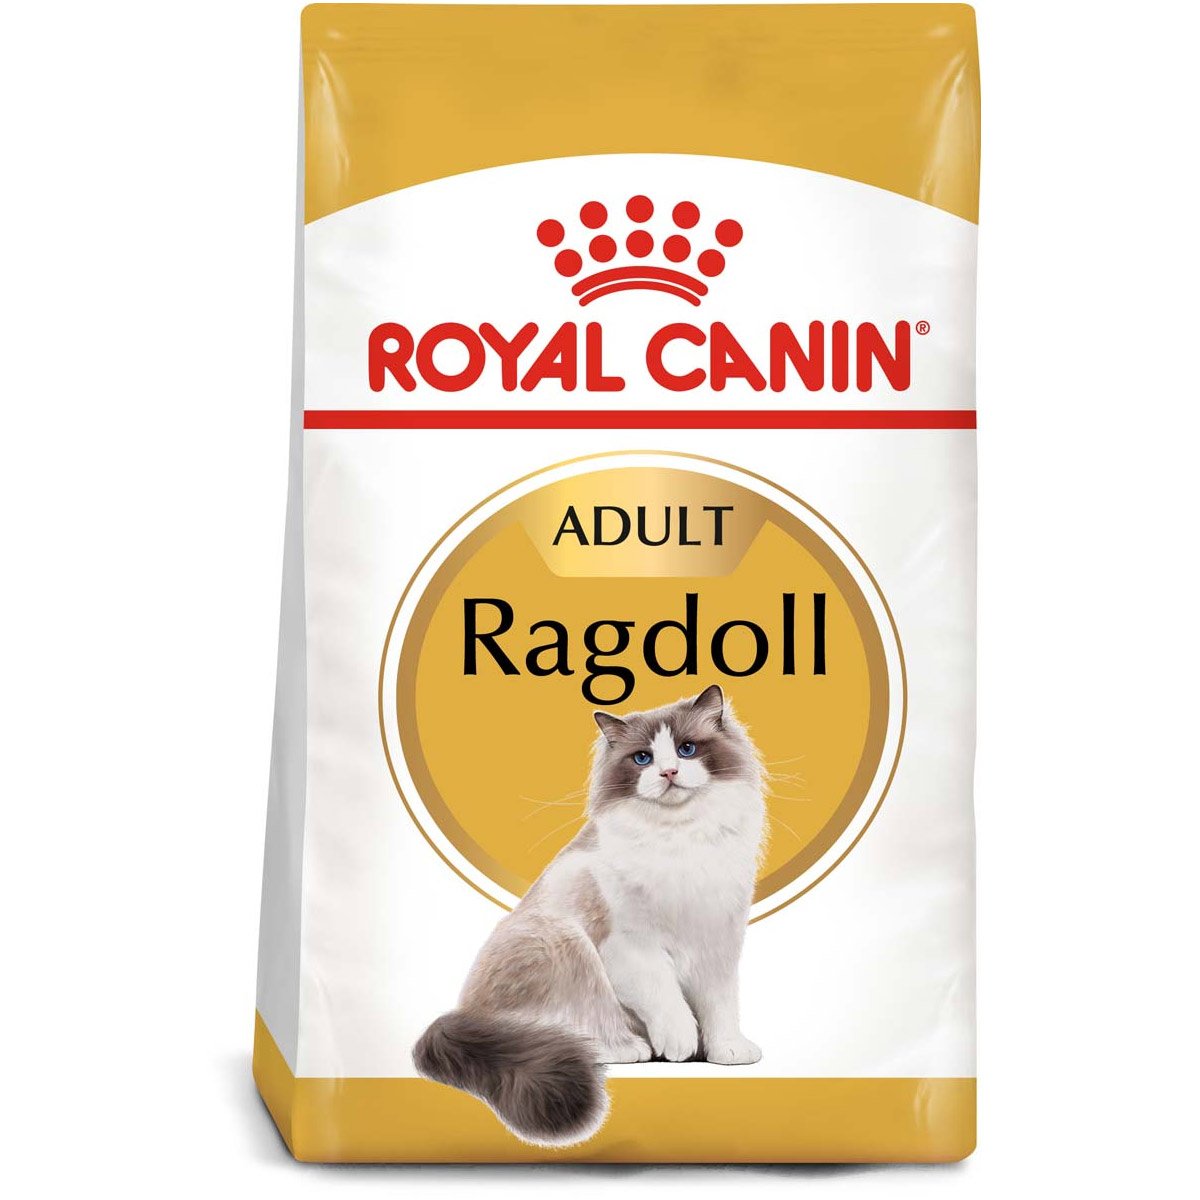 ROYAL CANIN Ragdoll Adult Katzenfutter trocken 2x10kg von Royal Canin